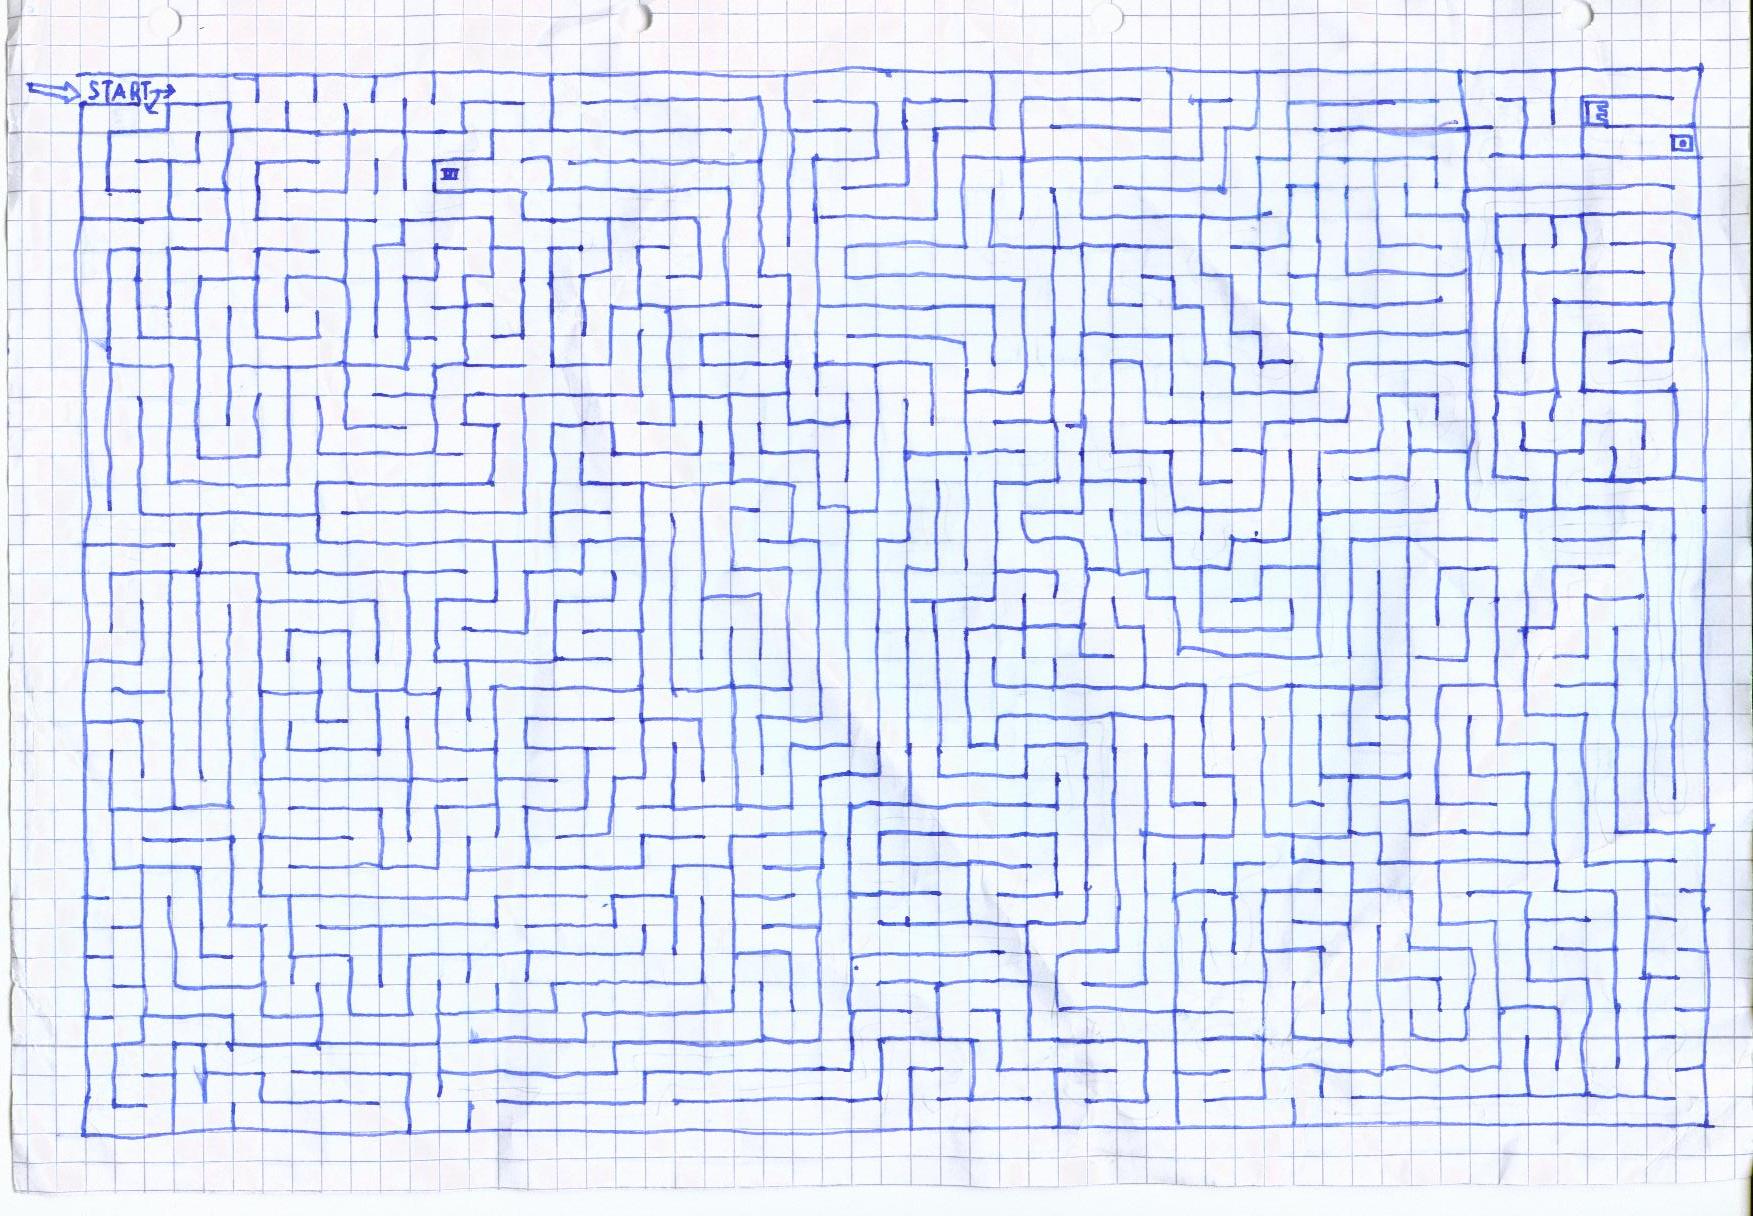 http://wolfol.de/2009/labyrinth/Labyrinth1.jpg